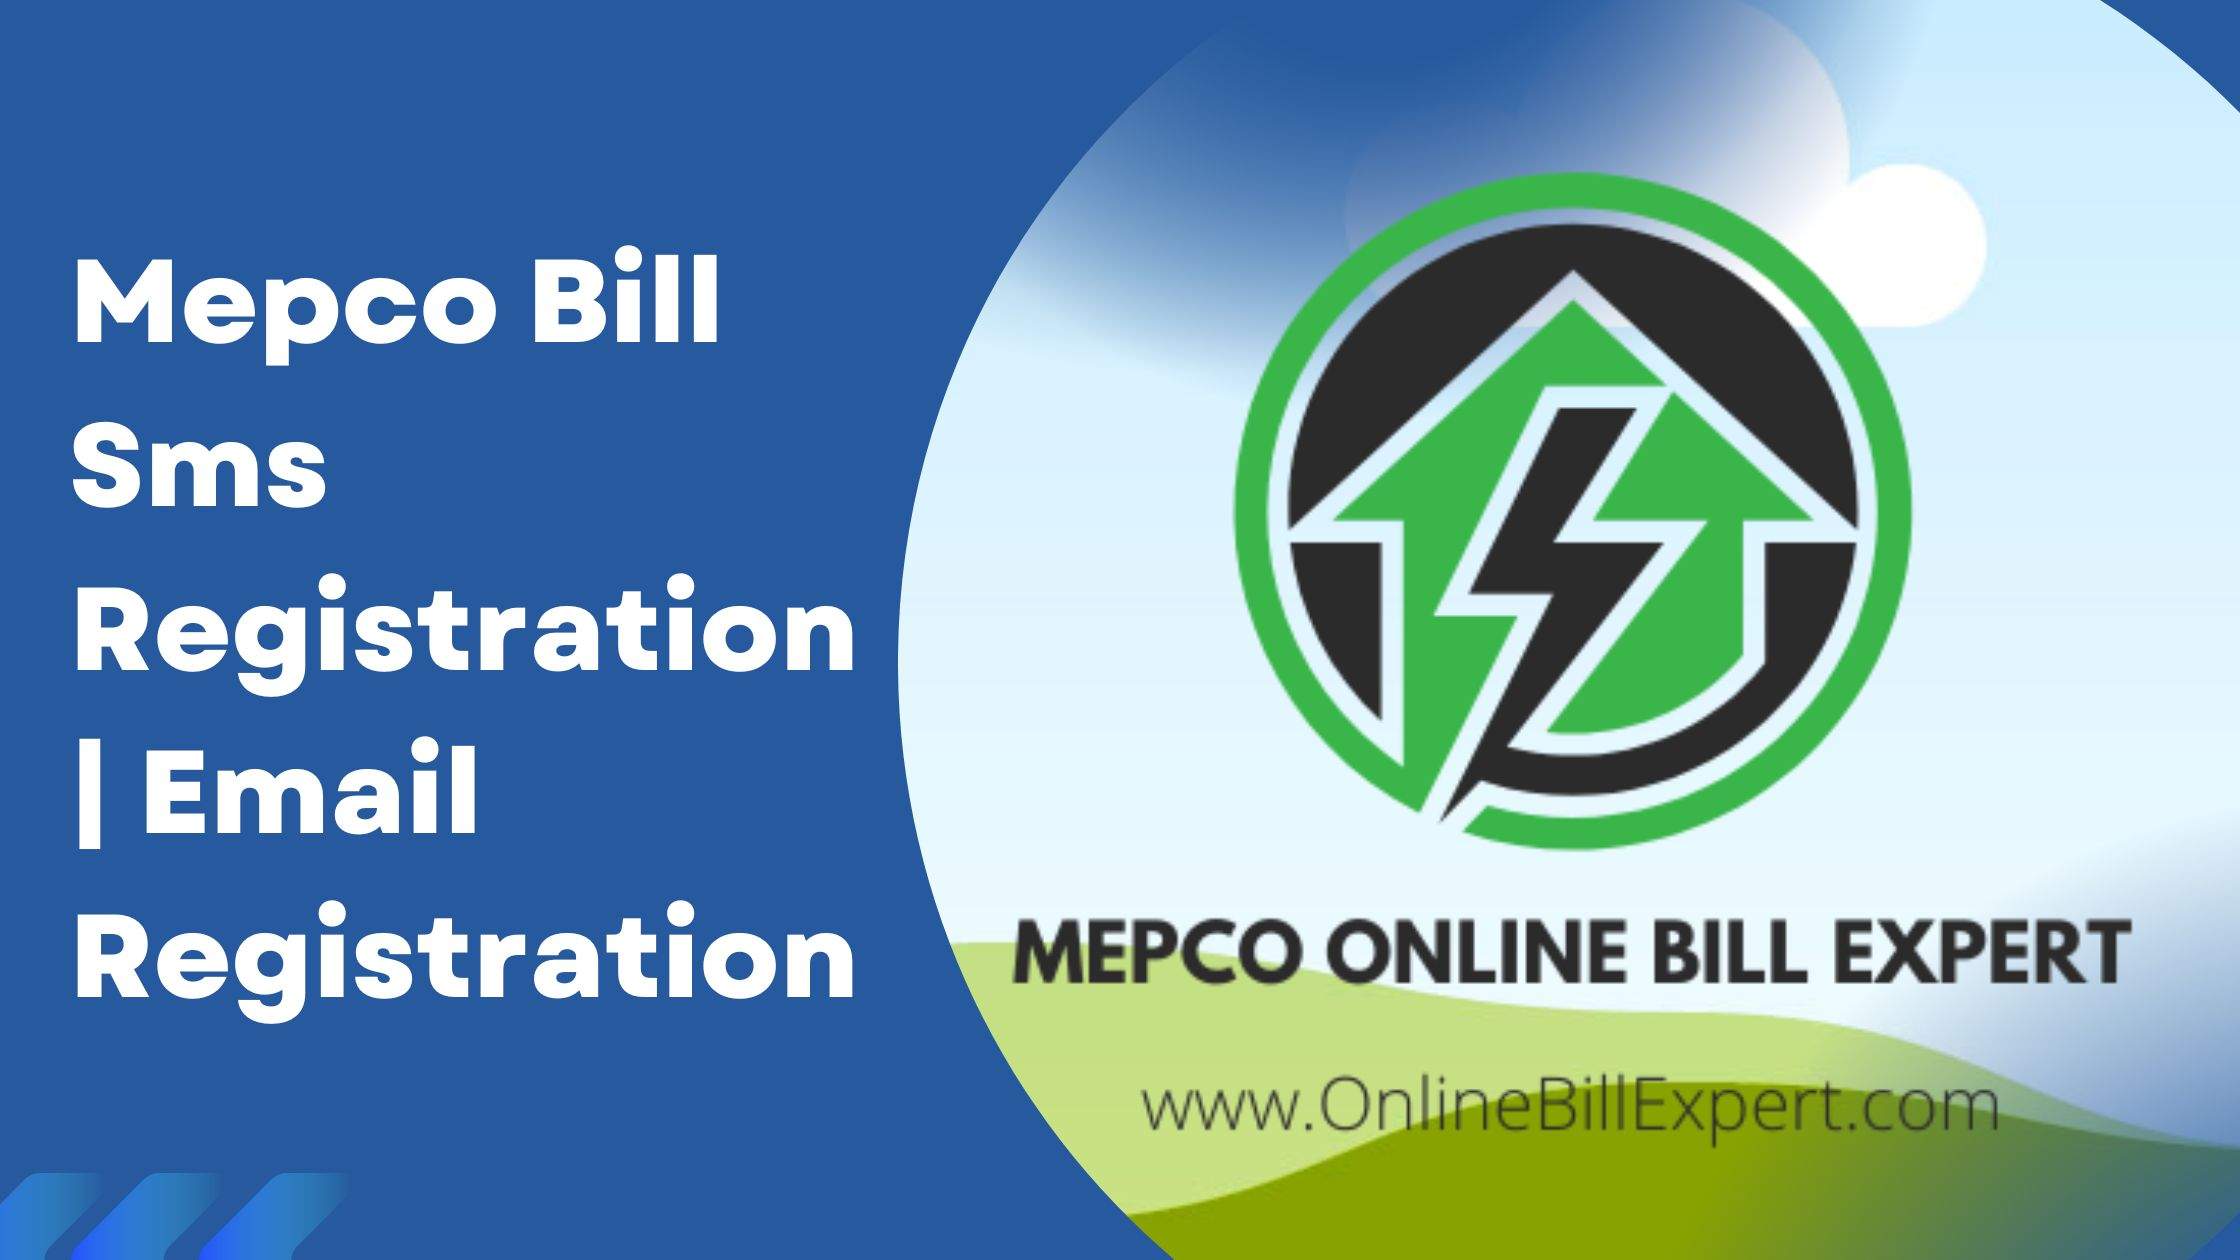 Mepco Bill Sms Registration Email Registration